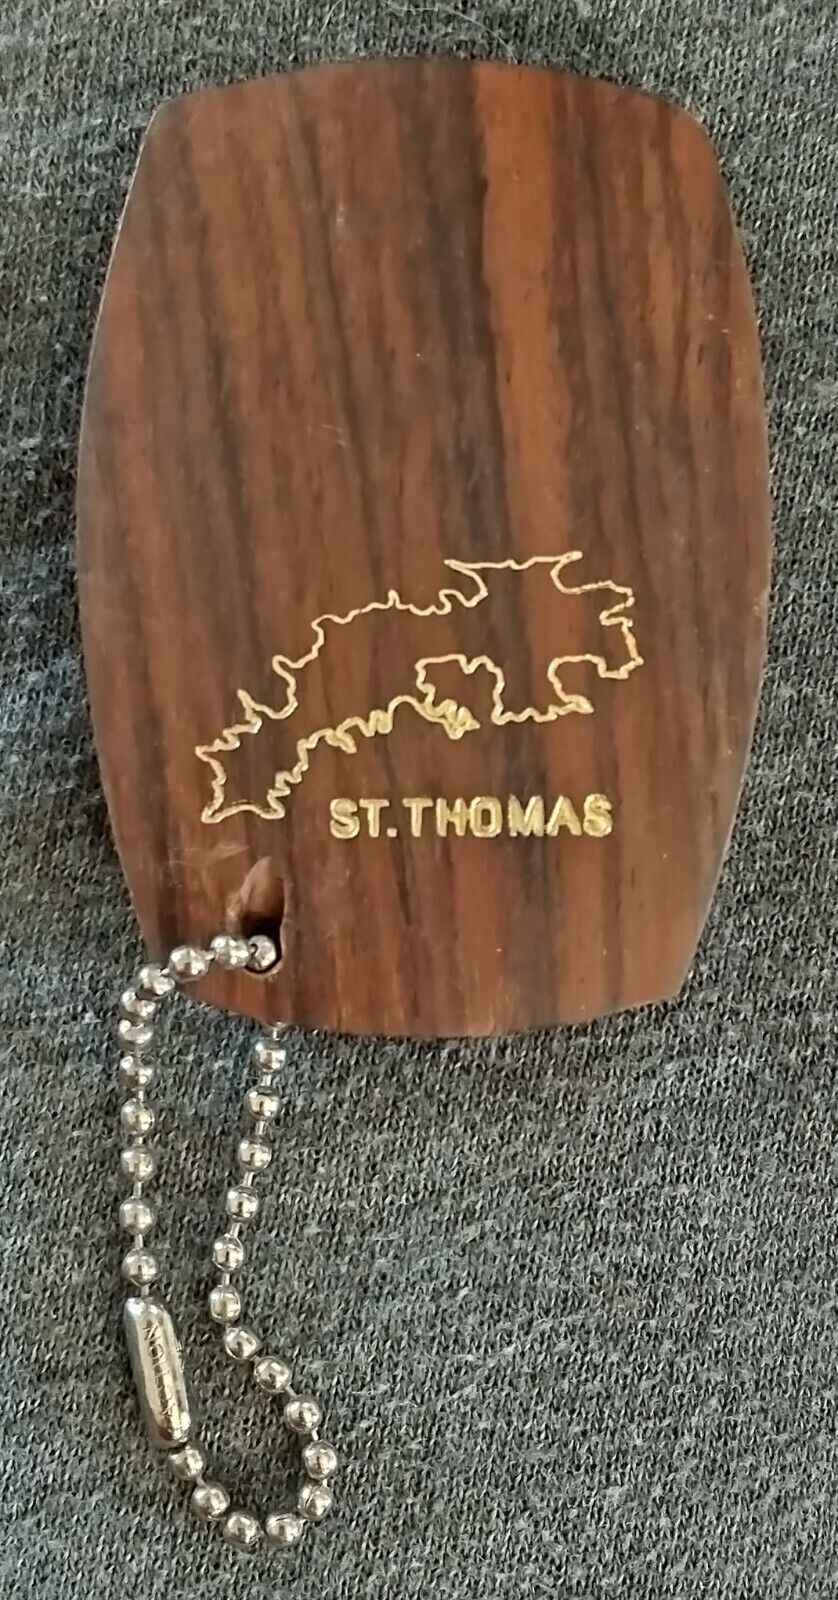 Vintage St Thomas Wooden And Metal Bottle Opener Keychain Meka Stainless Steel